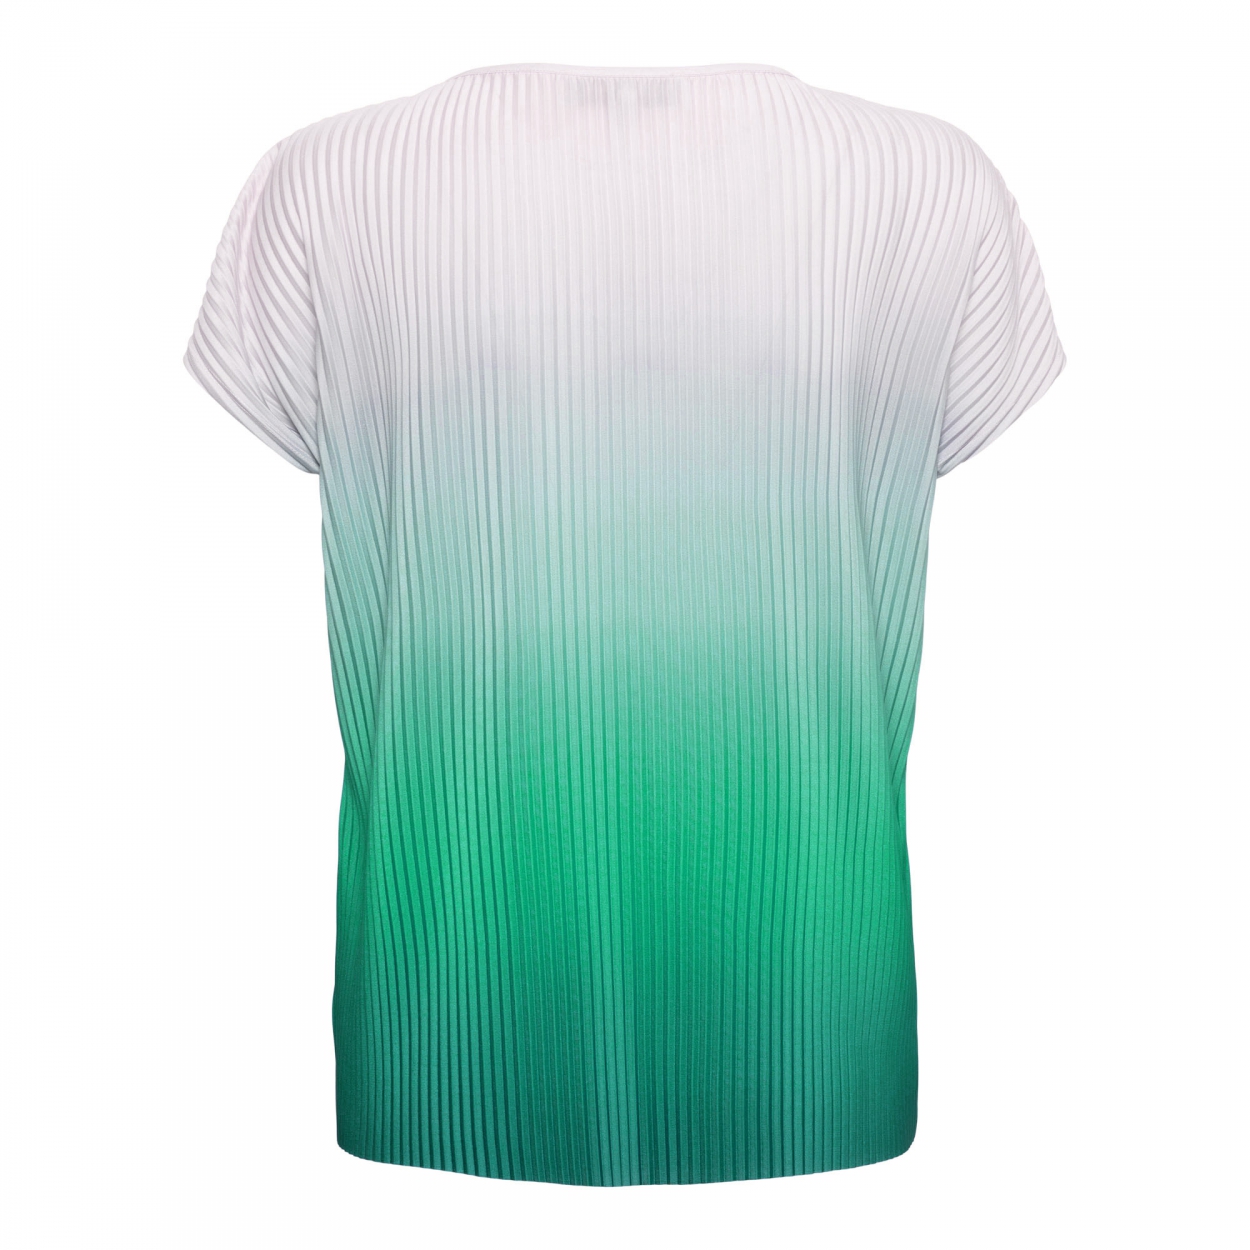 &Co TO245 Shirt Jade Plisse Green Multi